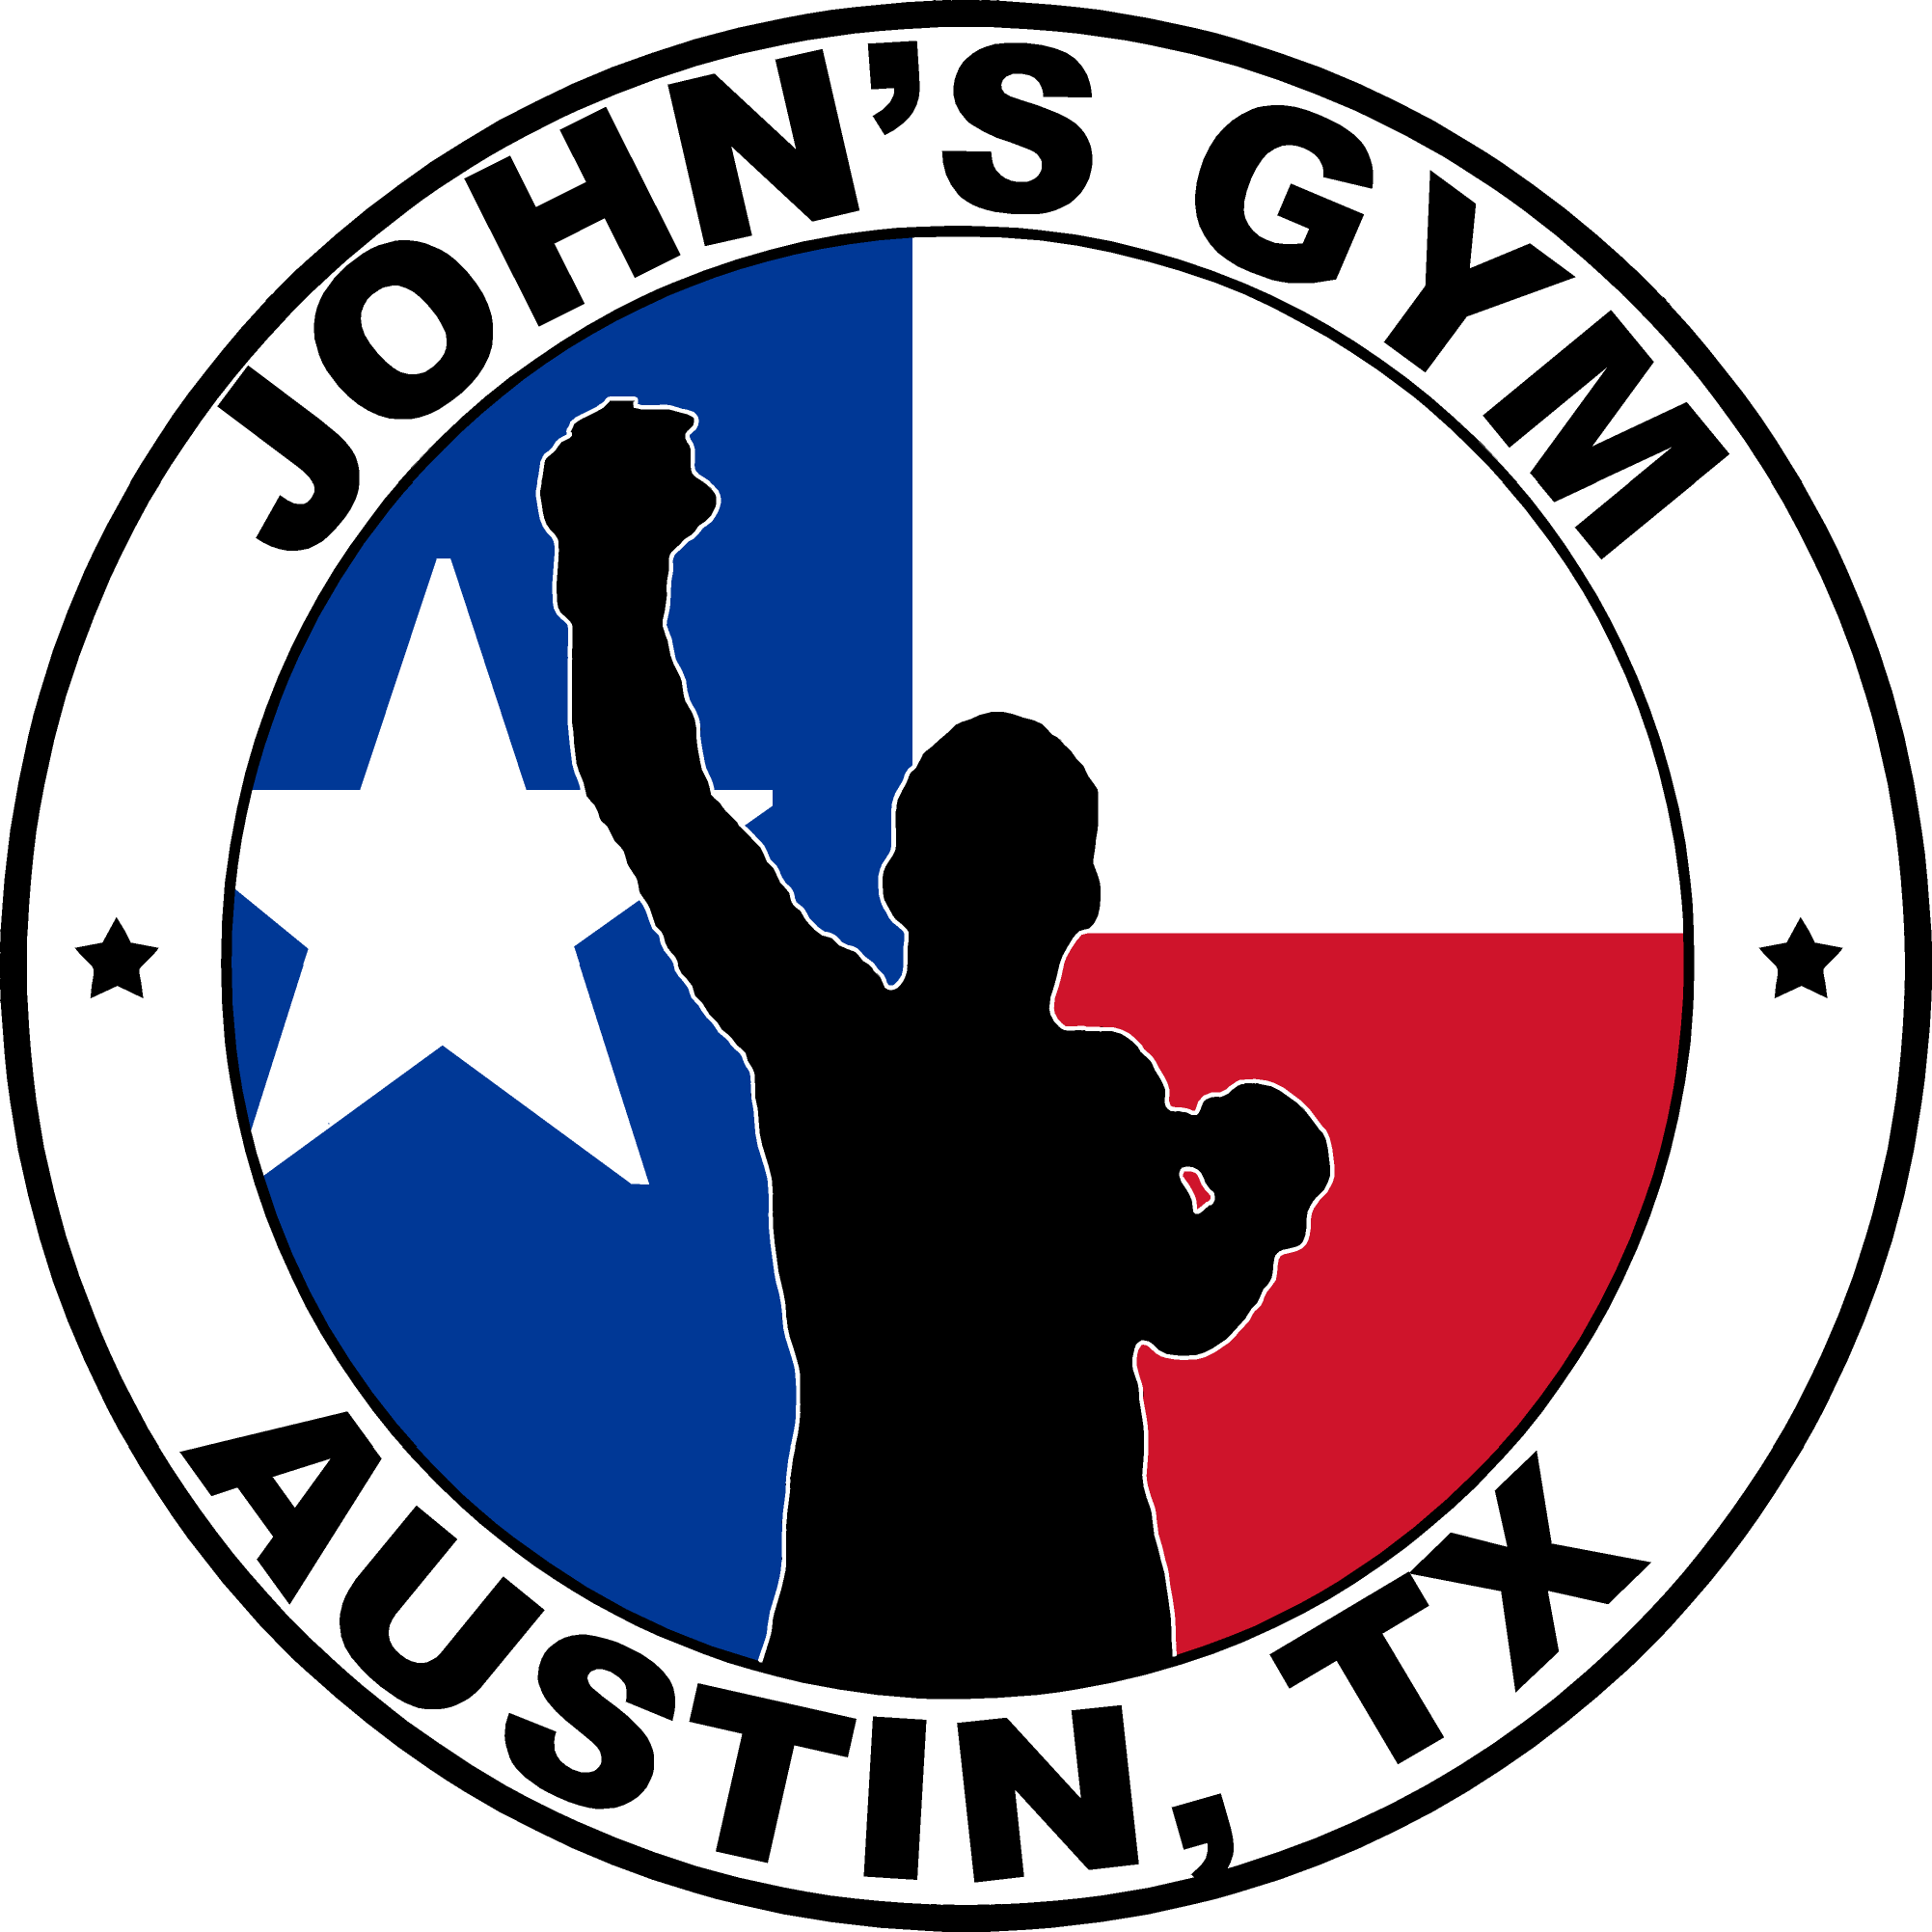 John's Gym - Johns Gym (2003x2003)